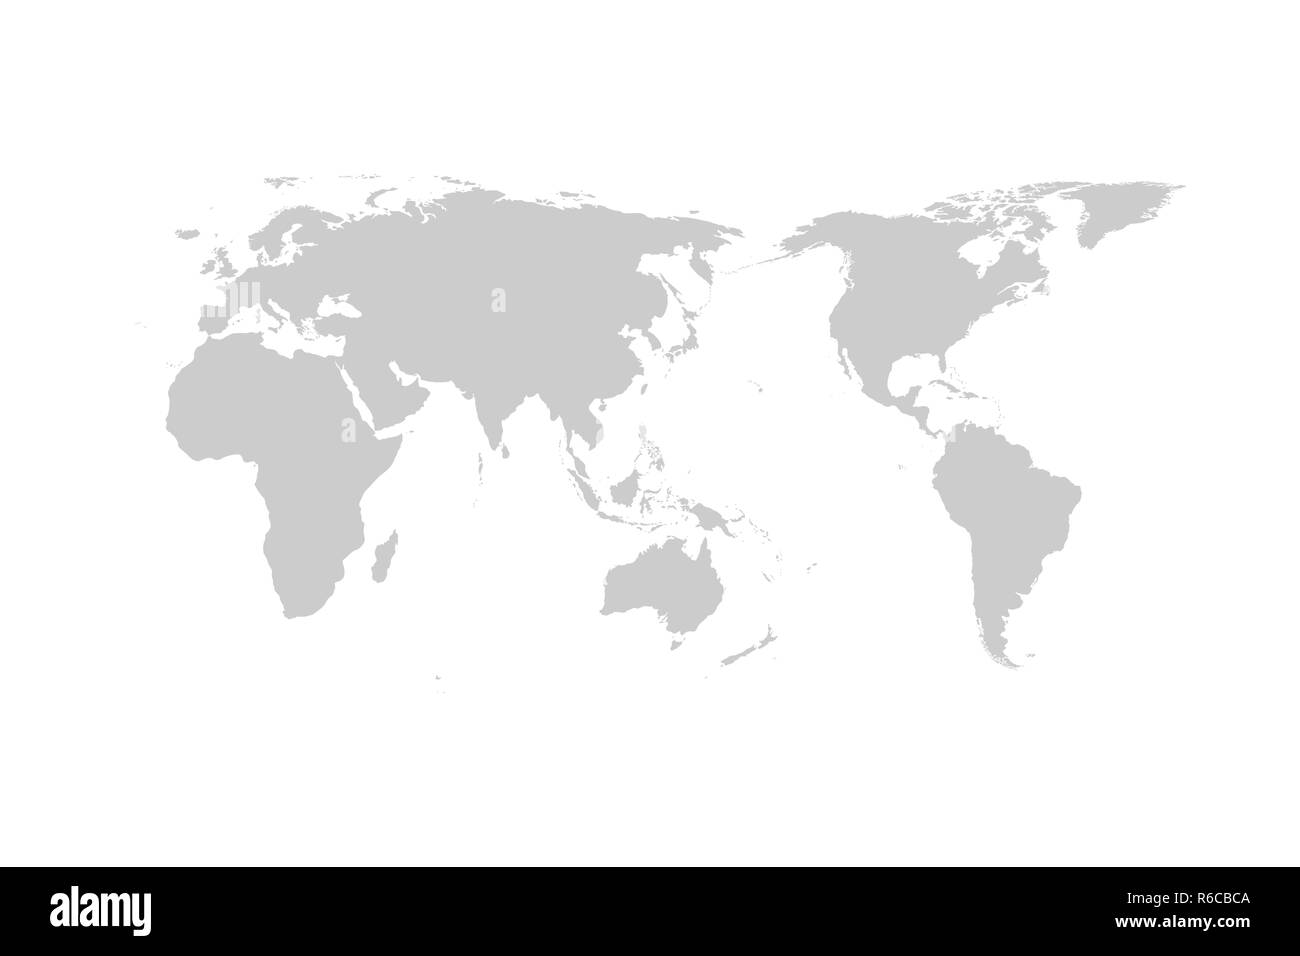 Graue Welt Karte Vektor flache Bauform, Asien im Zentrum. Stock Vektor